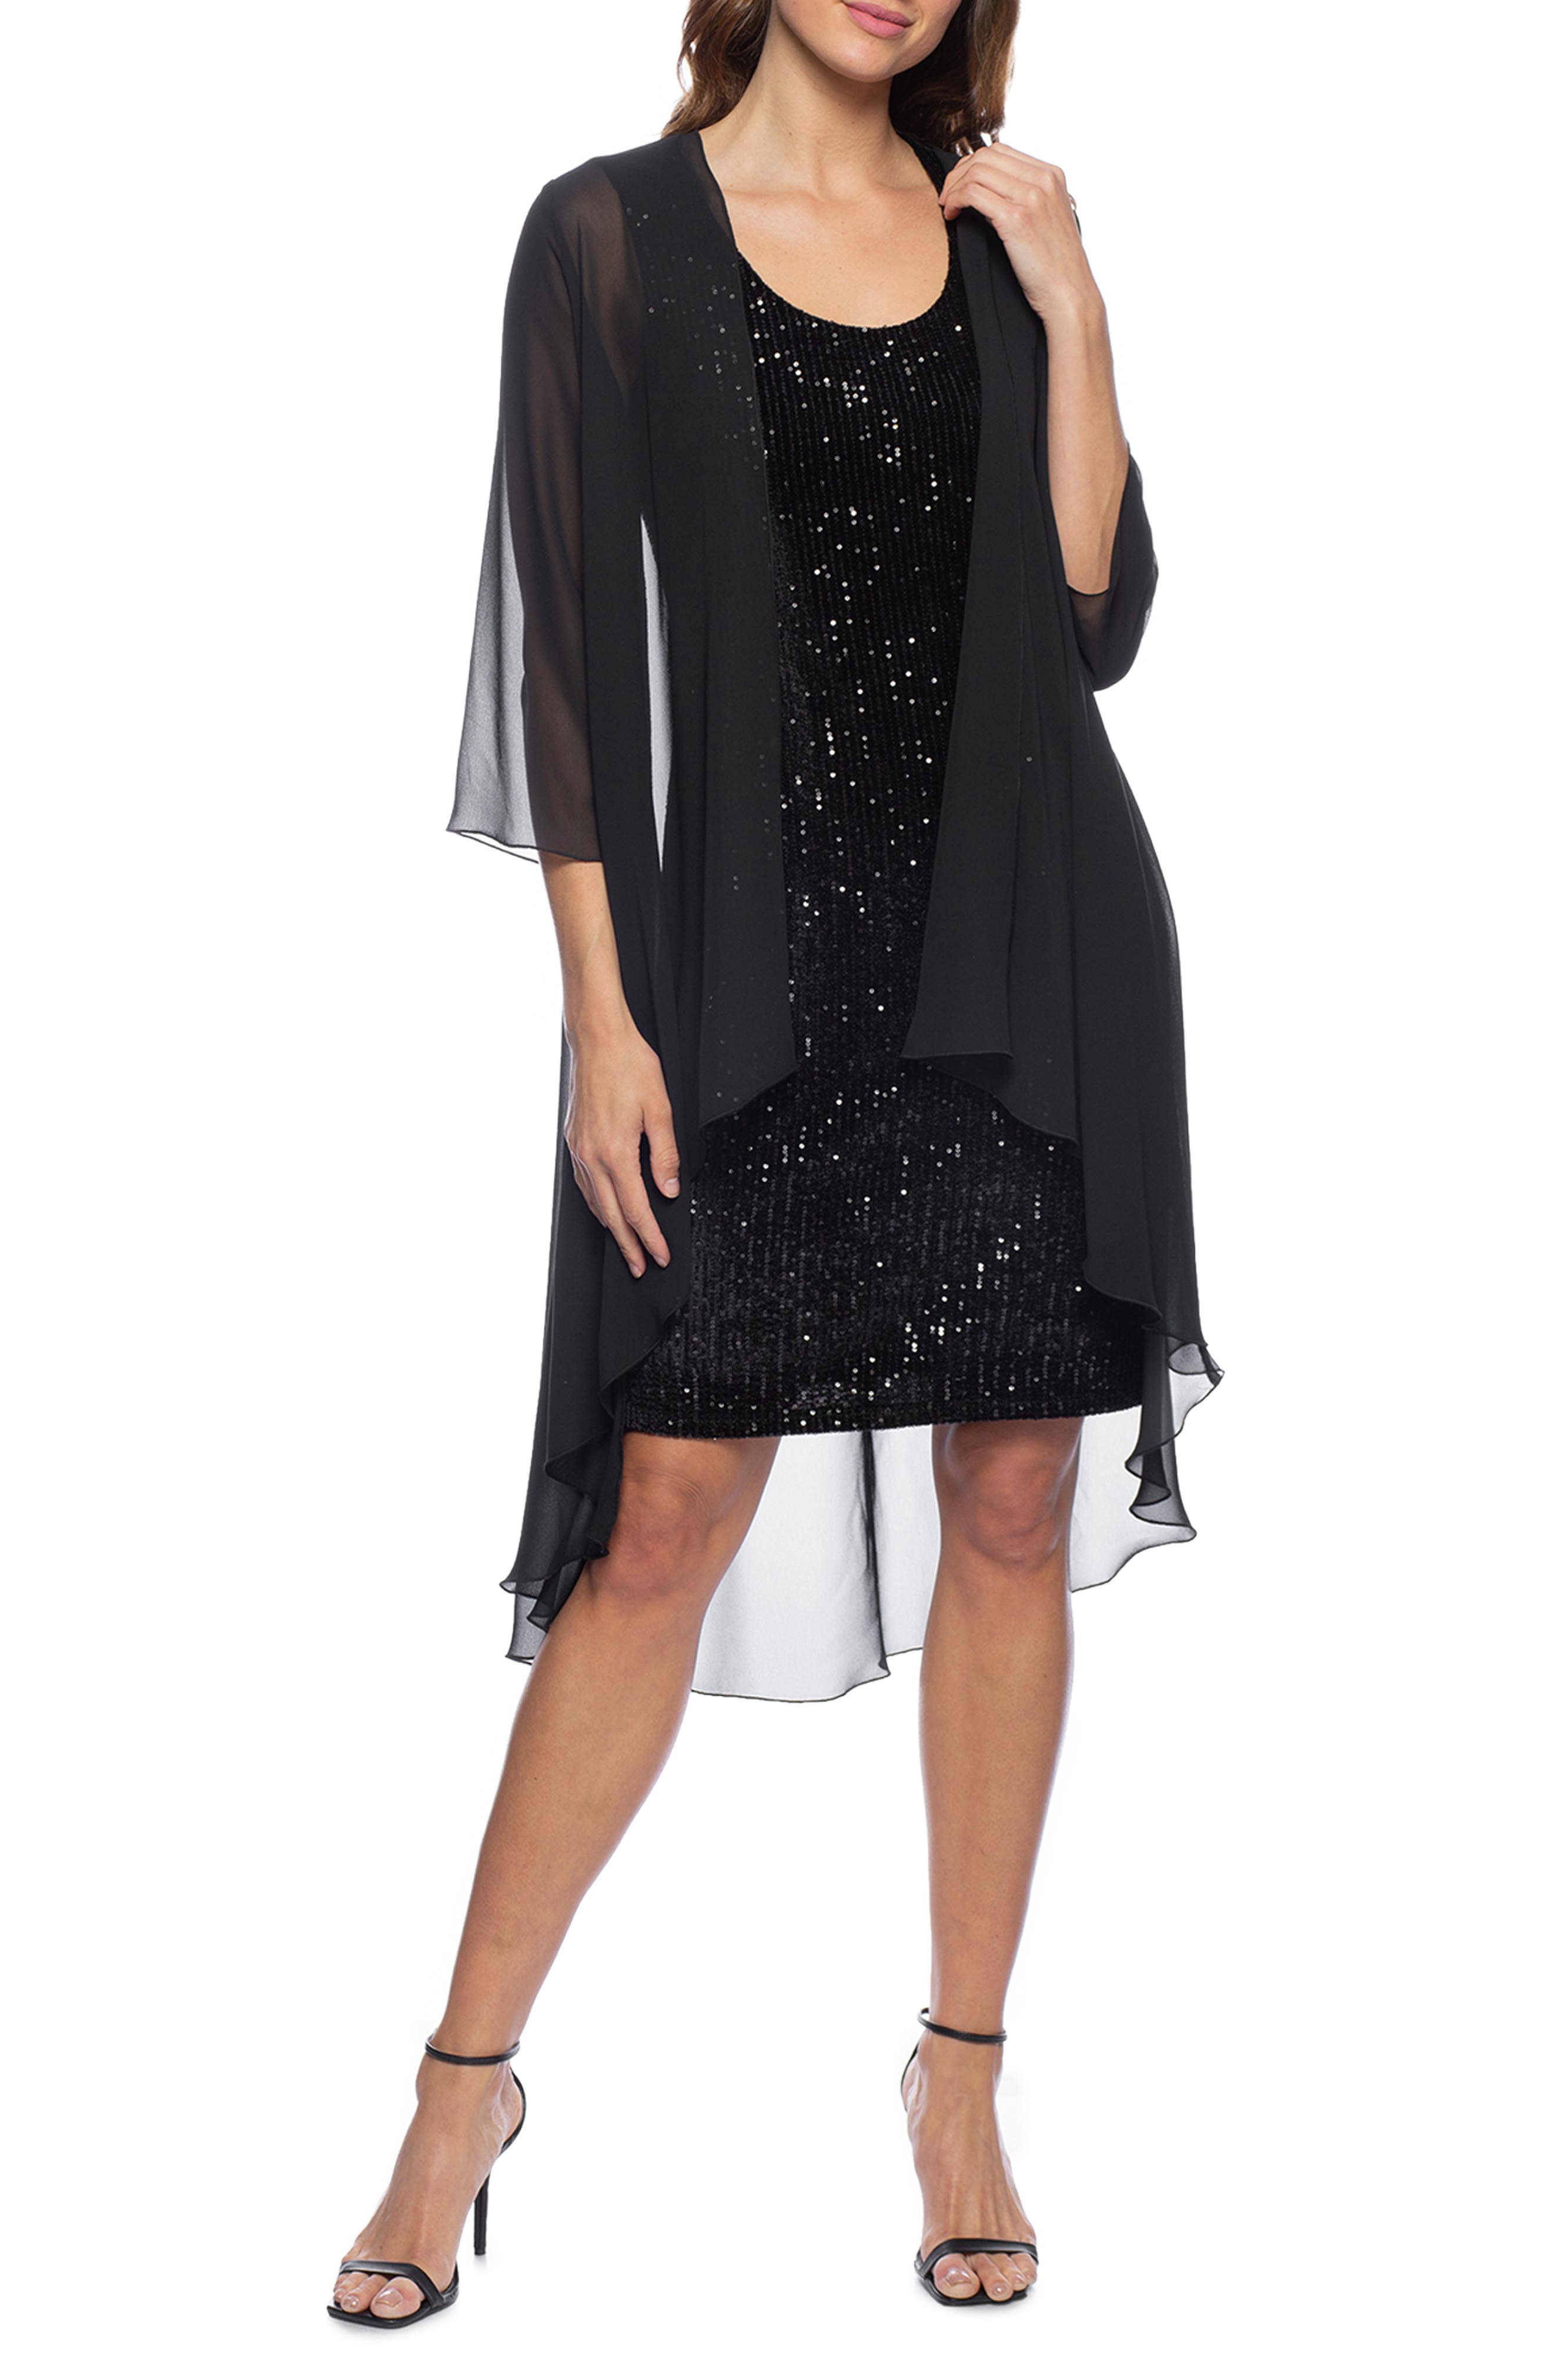 Buy Boardwalk Empire Inspired Dresses Marina Sequined Velvet Dress with Sheer Shawl in Black at Nordstrom Rack Size X-Large $72.97 AT vintagedancer.com